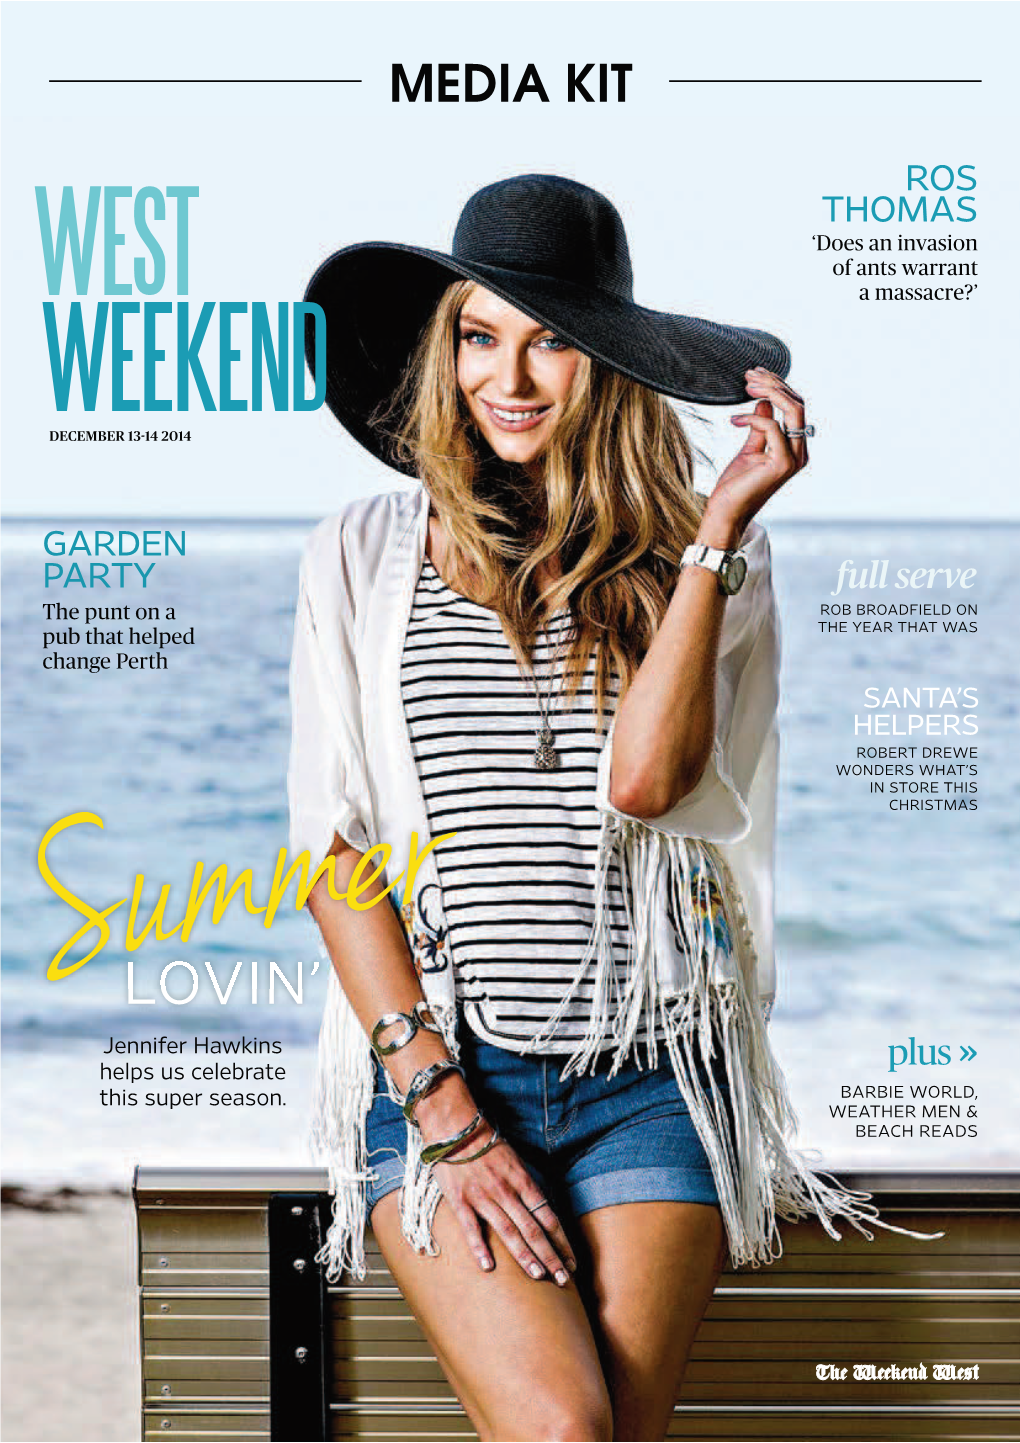 West Weekend Magazine 2015 Media